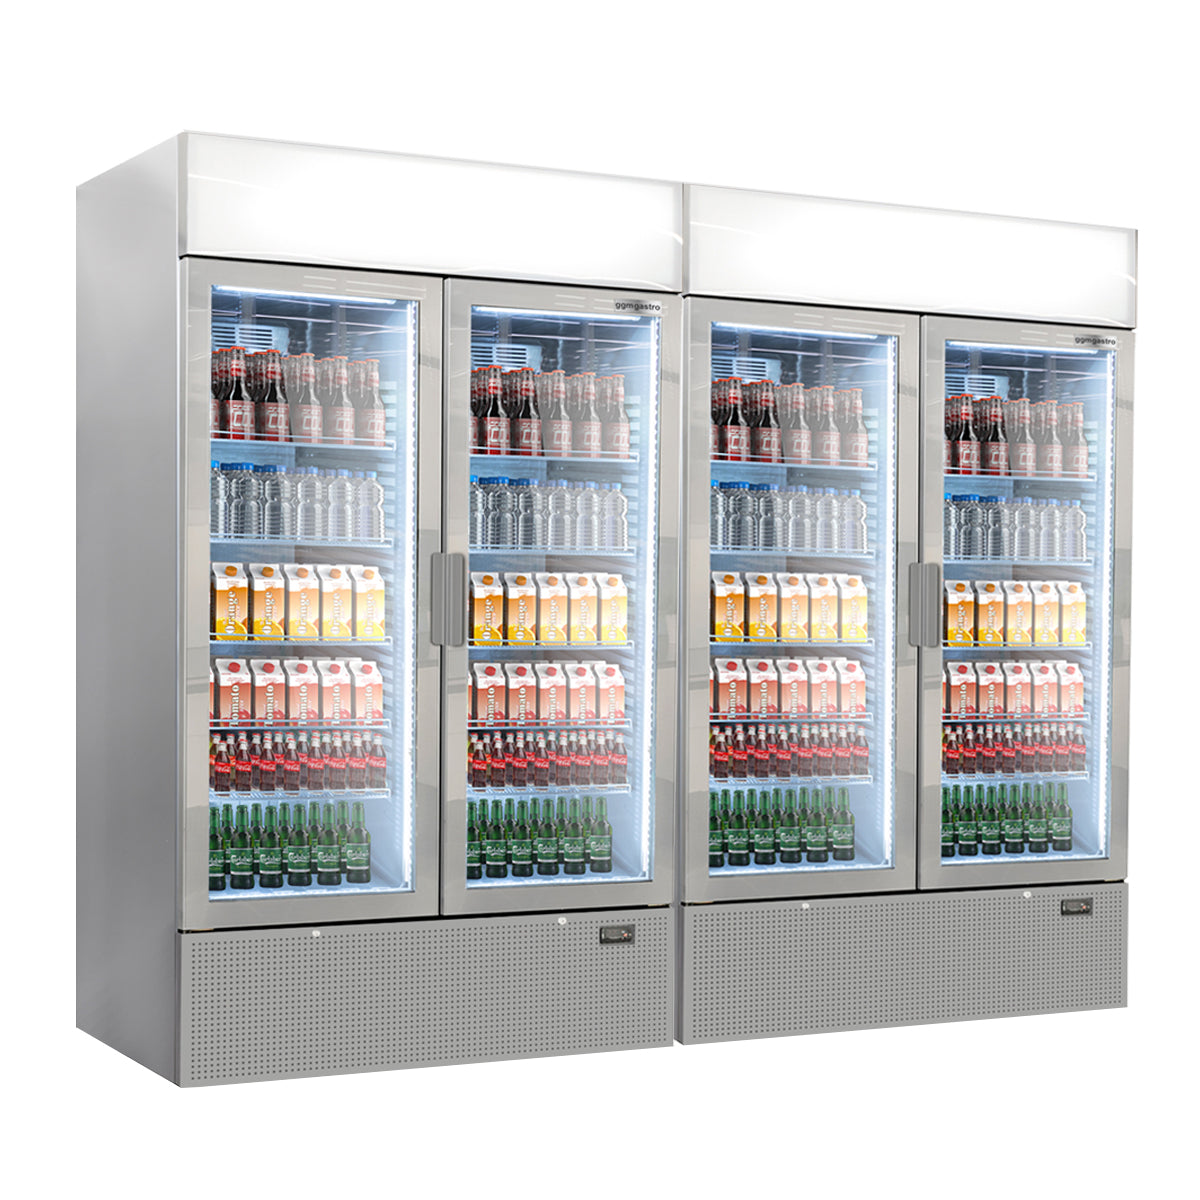 (2 броя) Хладилник за напитки - 1048 литра (нетен обем) - СИВ